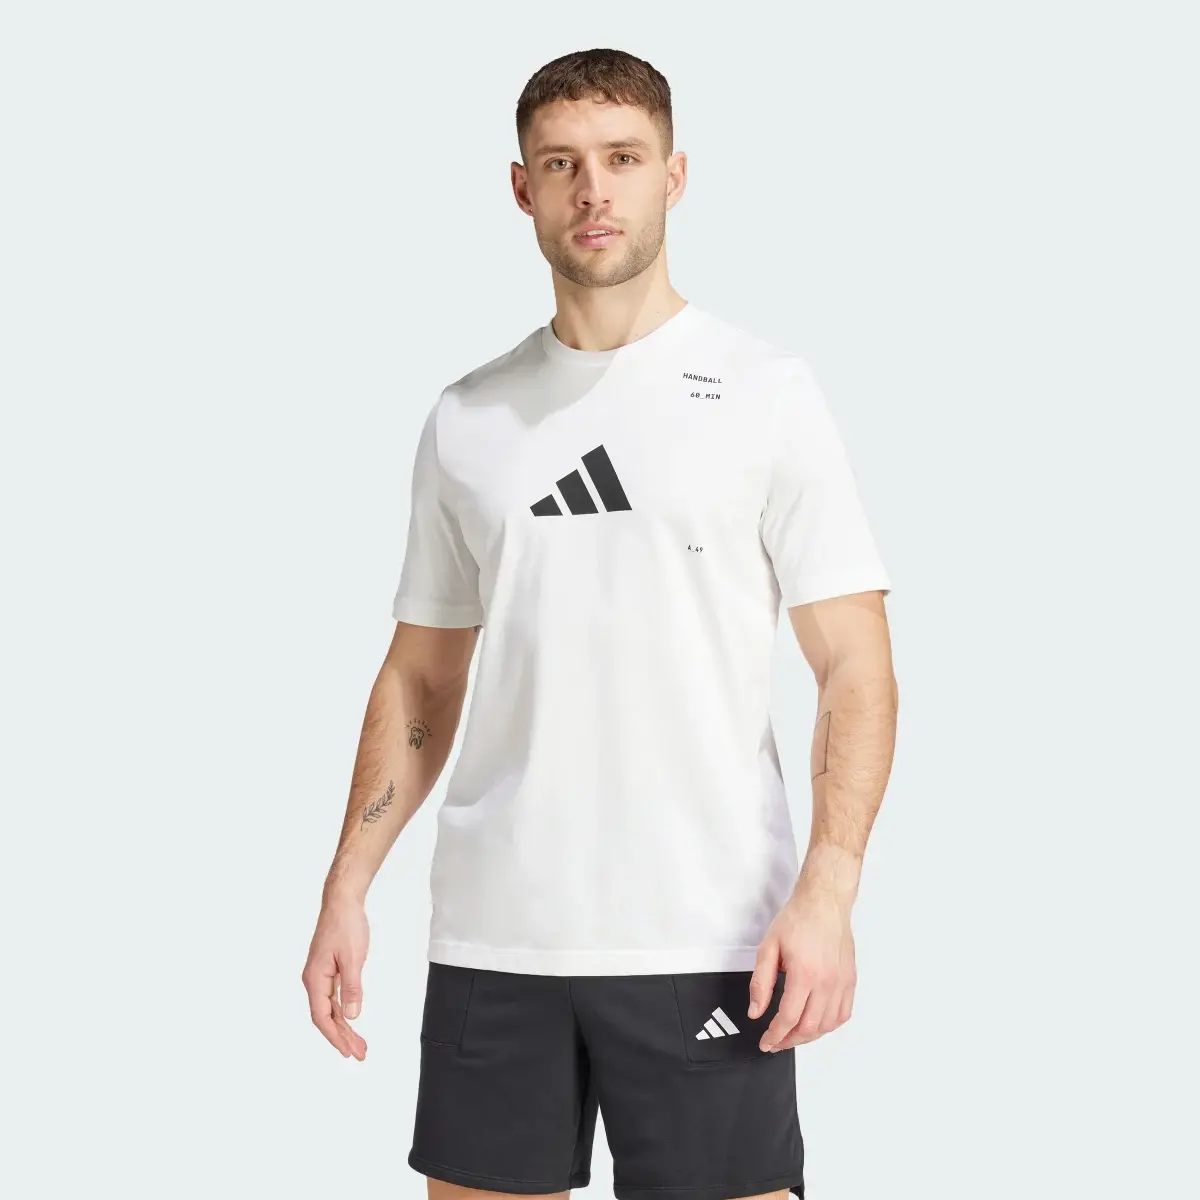 Adidas Handball Category Graphic T-Shirt. 2